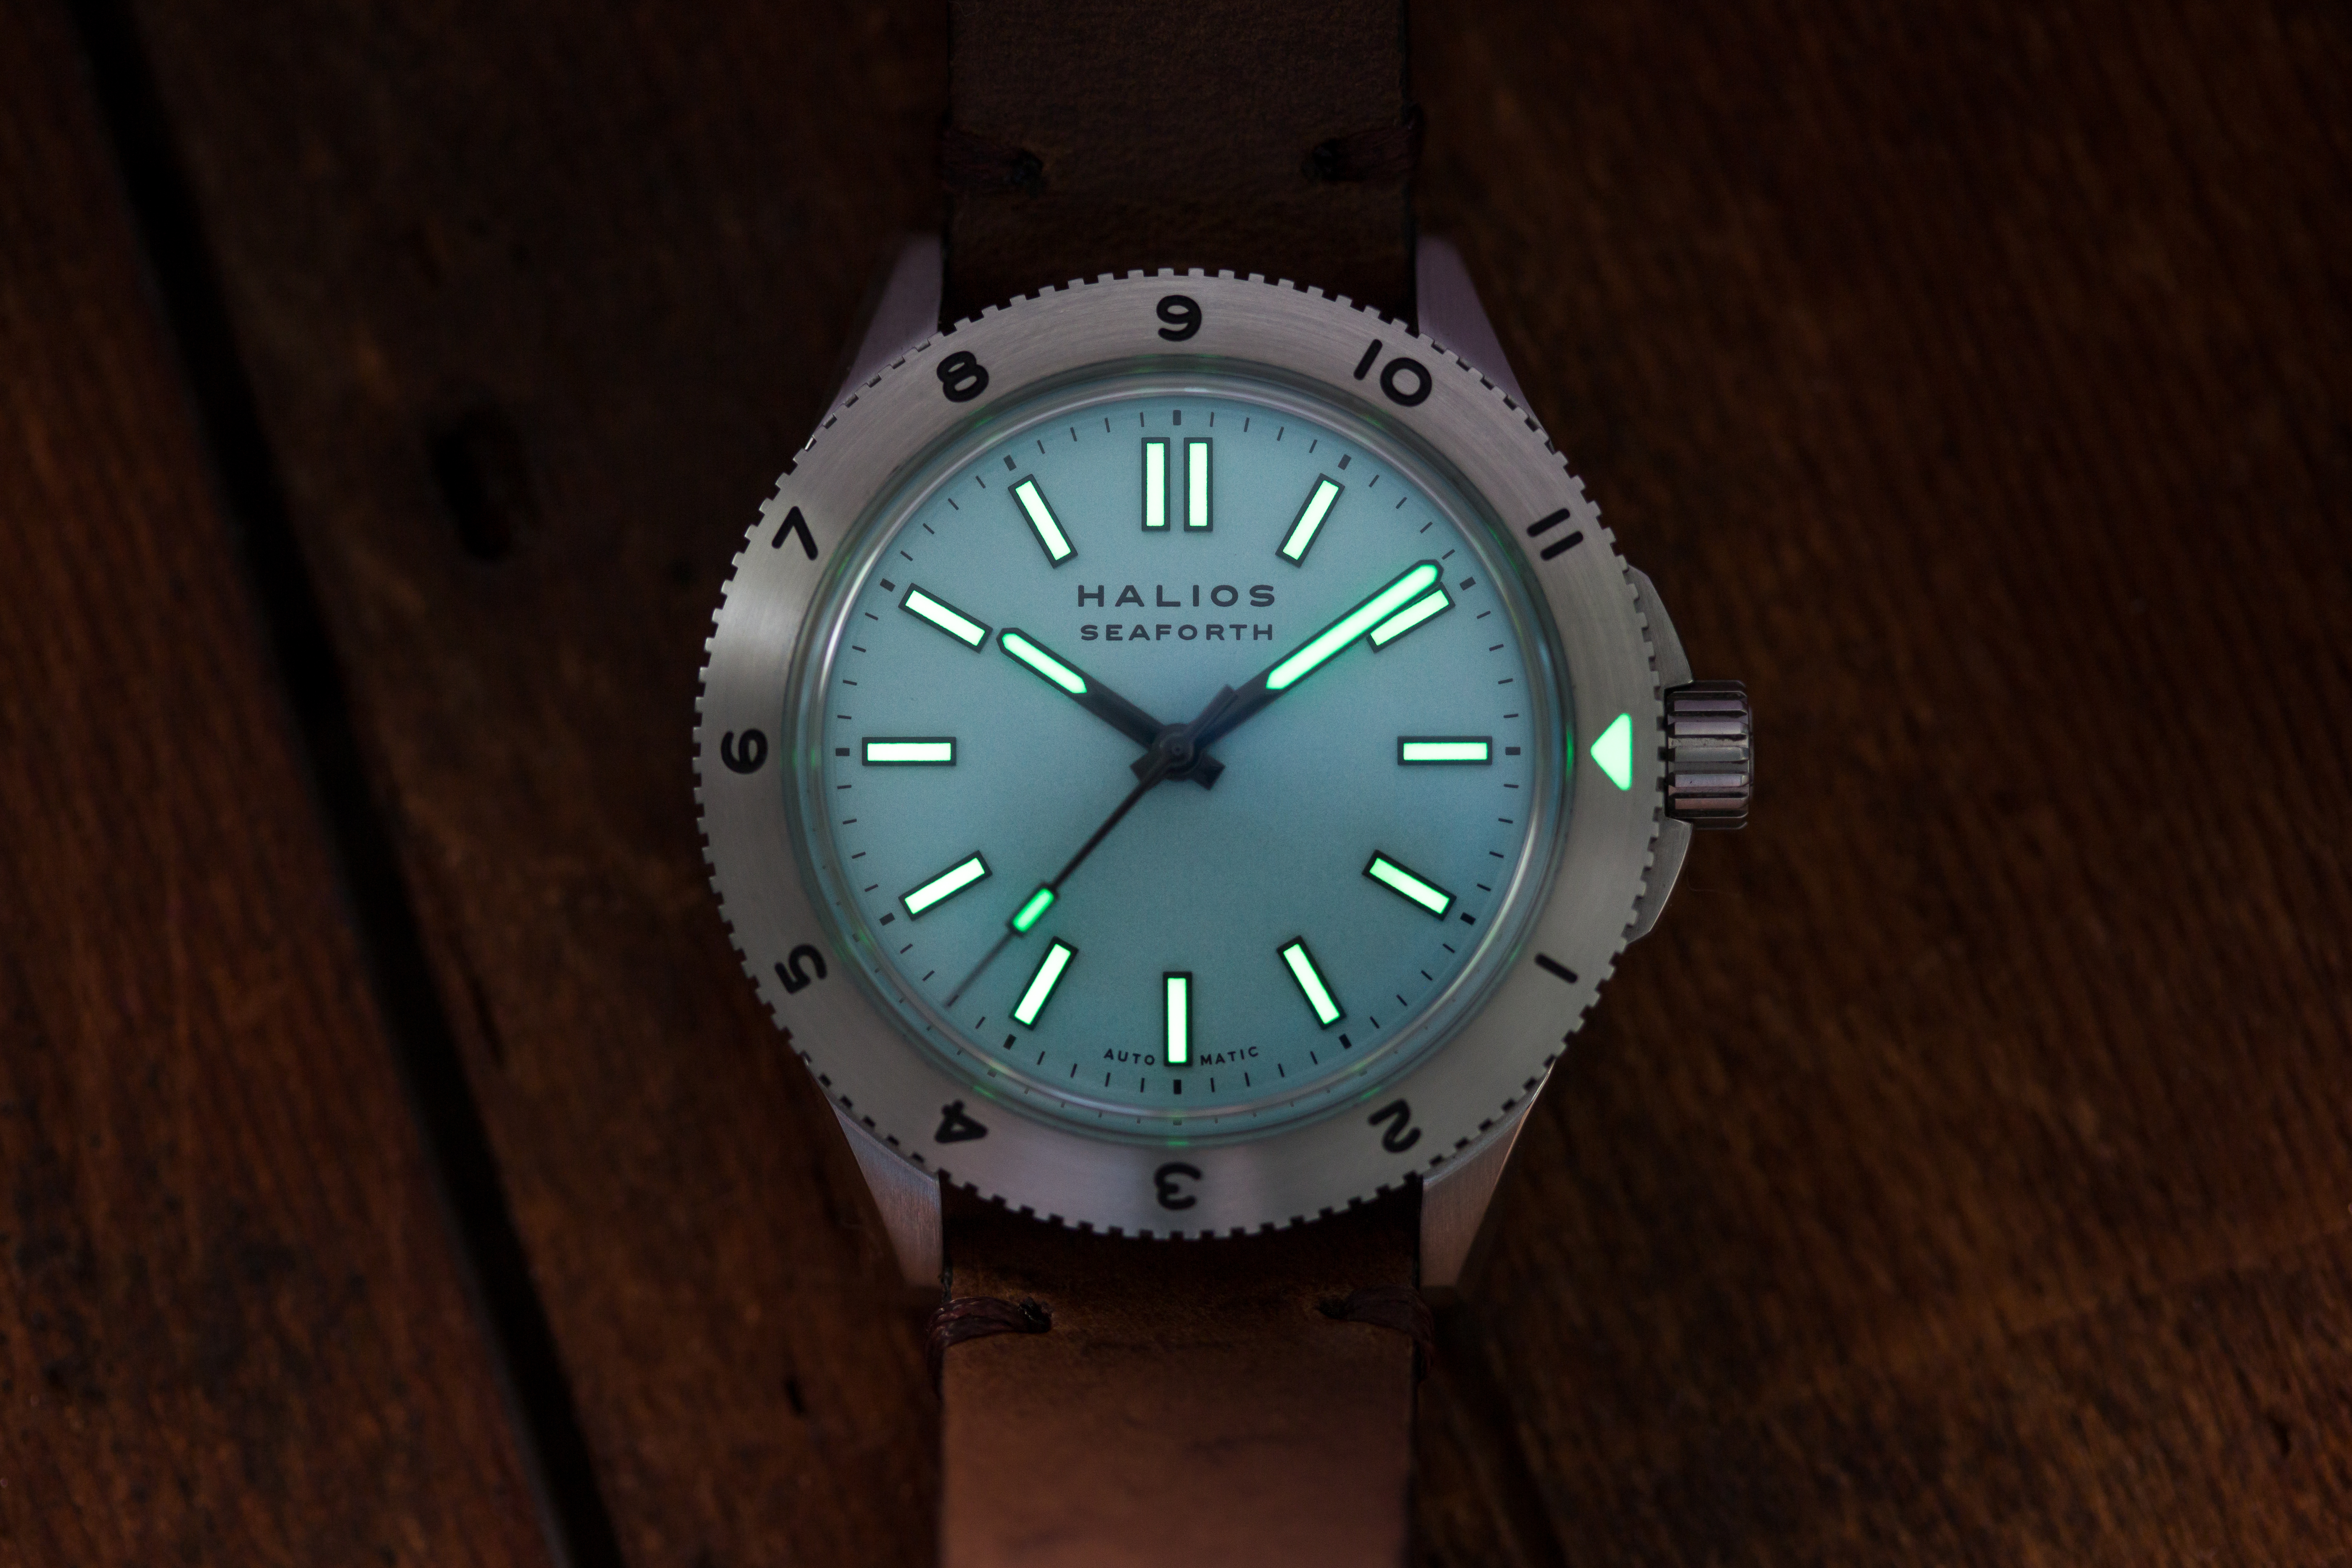 Halios Seaforth Watches For Men, Wrist Watch, Watches, 47% OFF